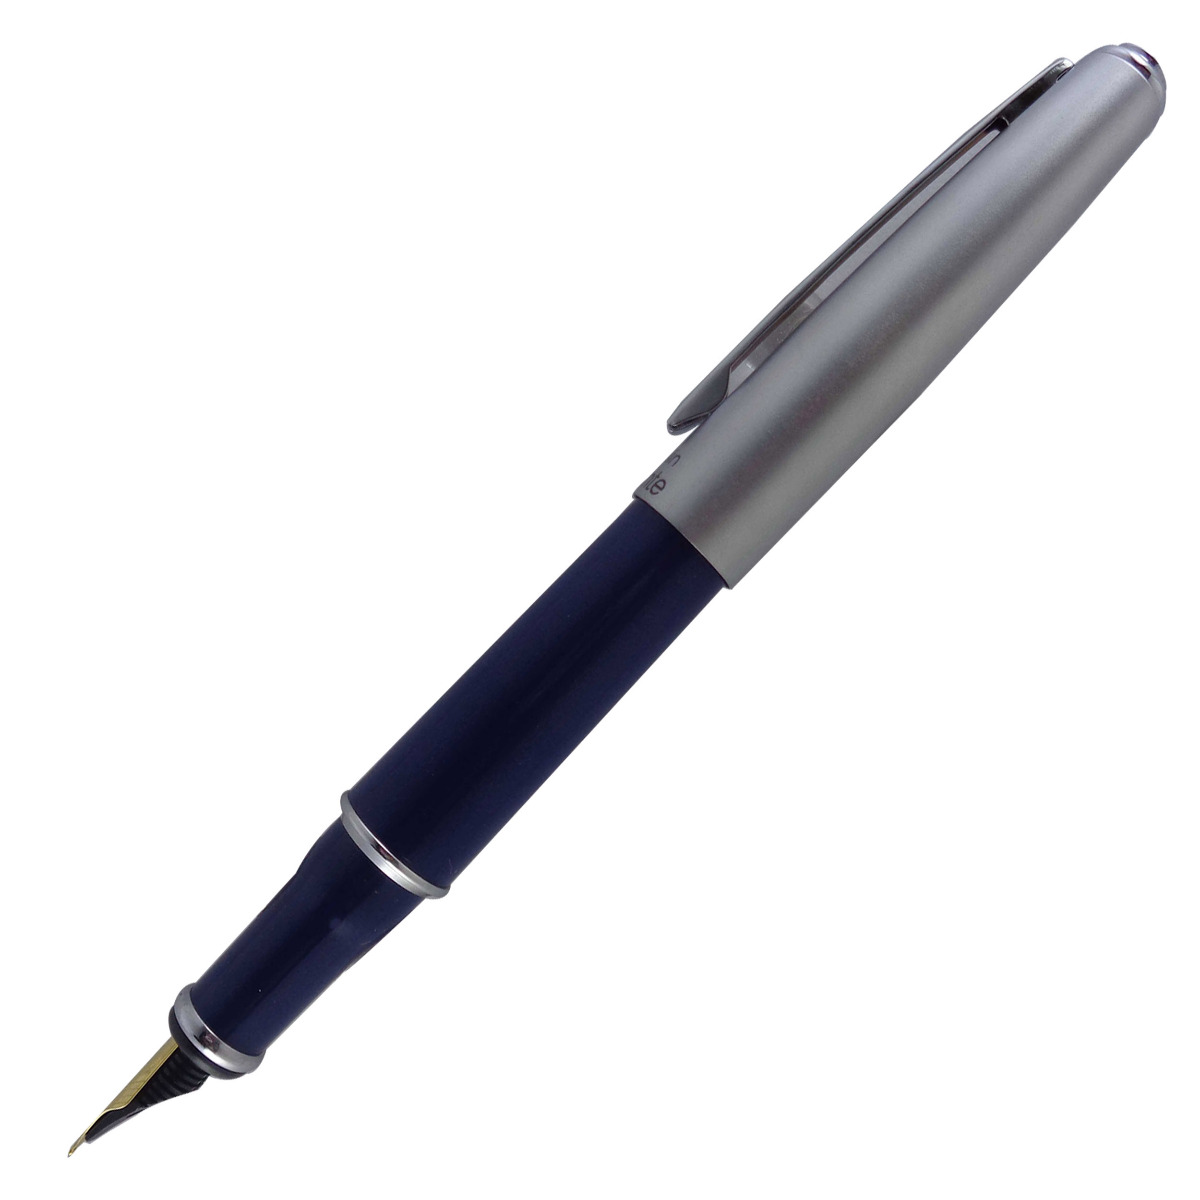 Camlin Elegante – Blue Color Body With Silver Cap Thick Body Fountain Pen Model: 13509